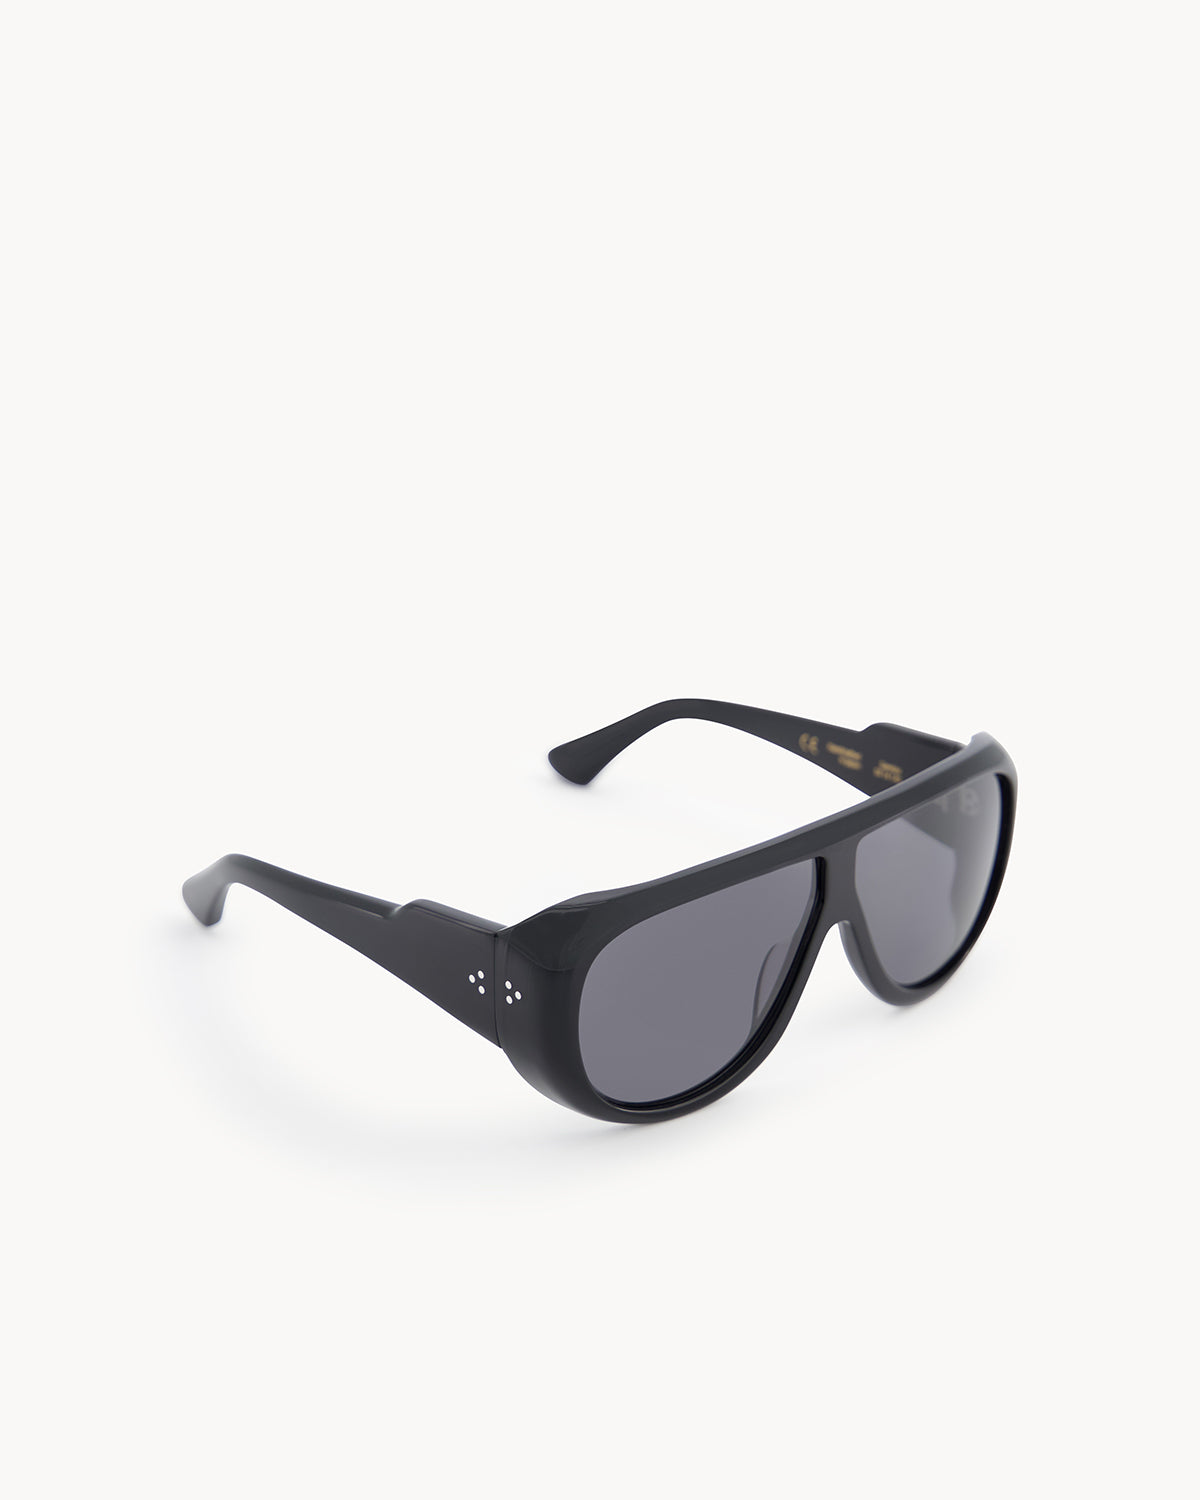 Port Tanger Gambia Sunglasses in Black Acetate and Black Lenses 2